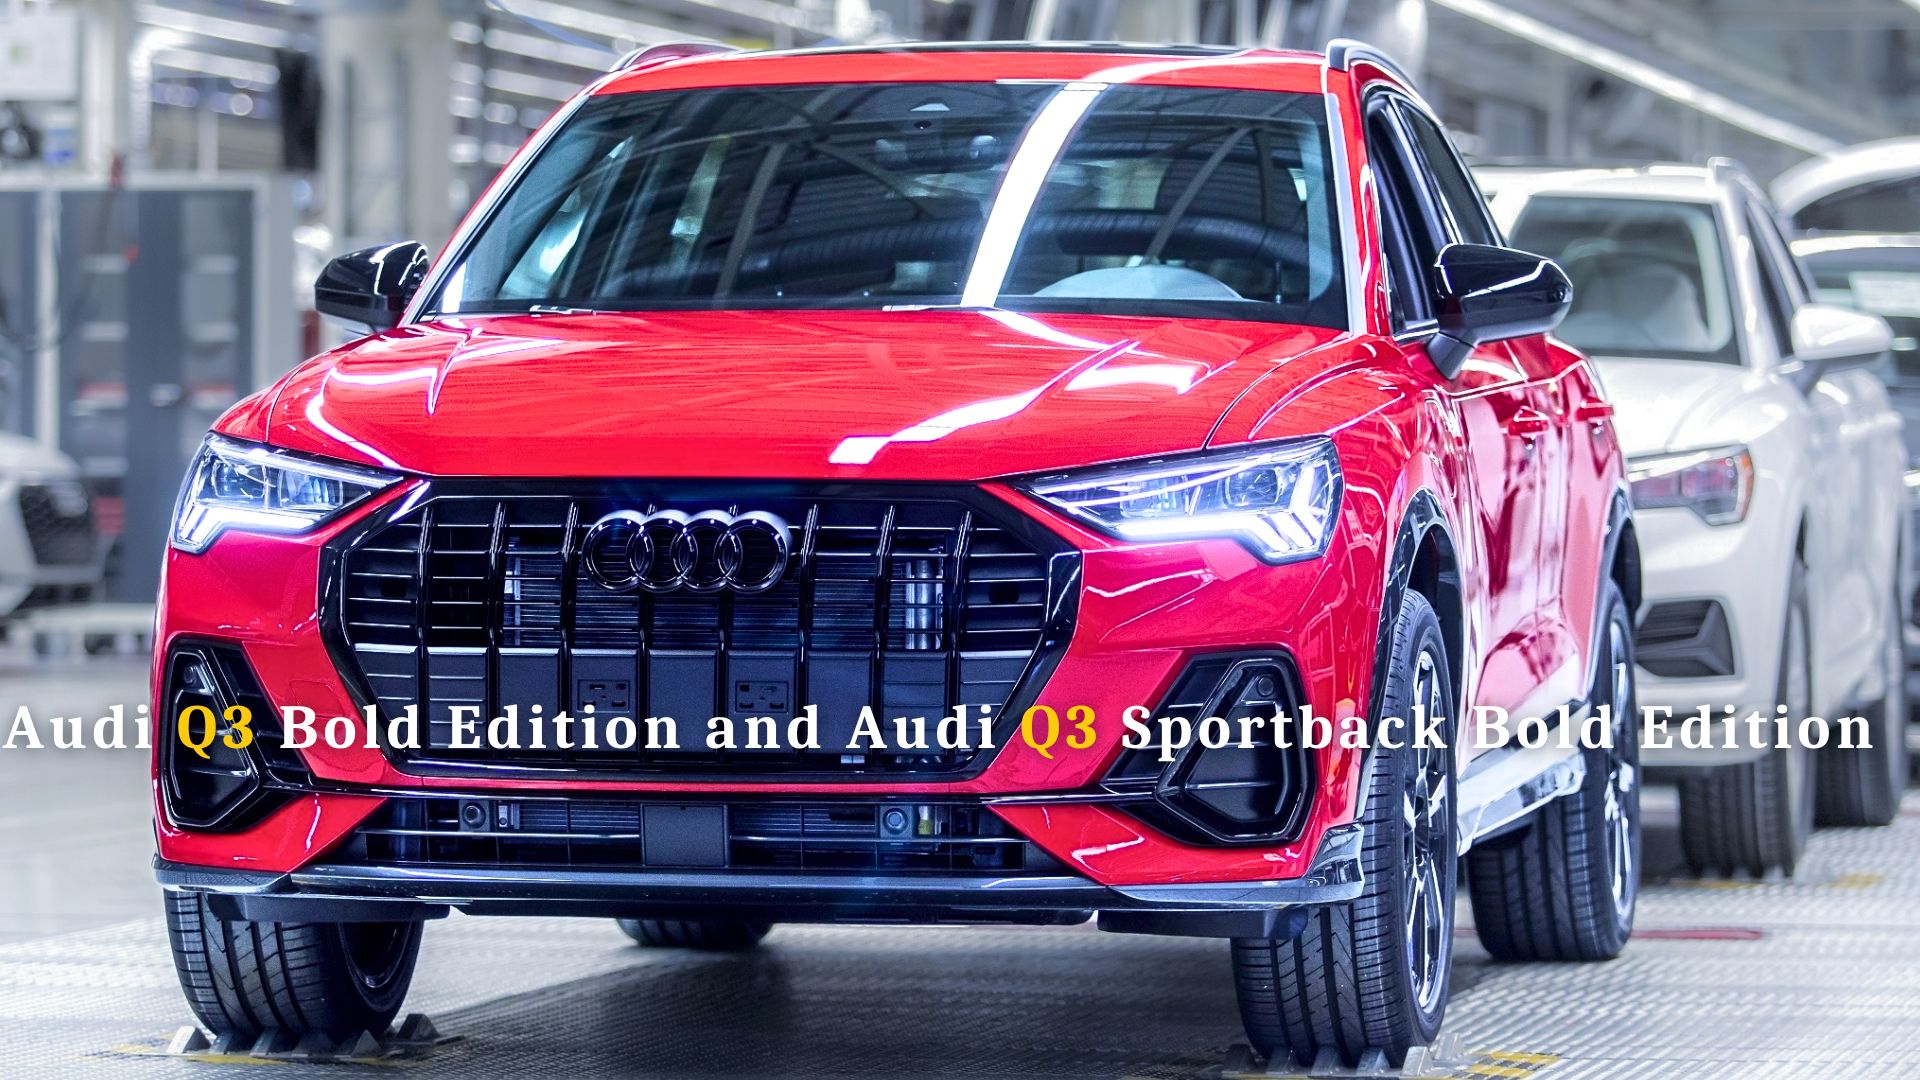 Audi Q3 Bold Edition and Audi Q3 Sportback Bold Edition